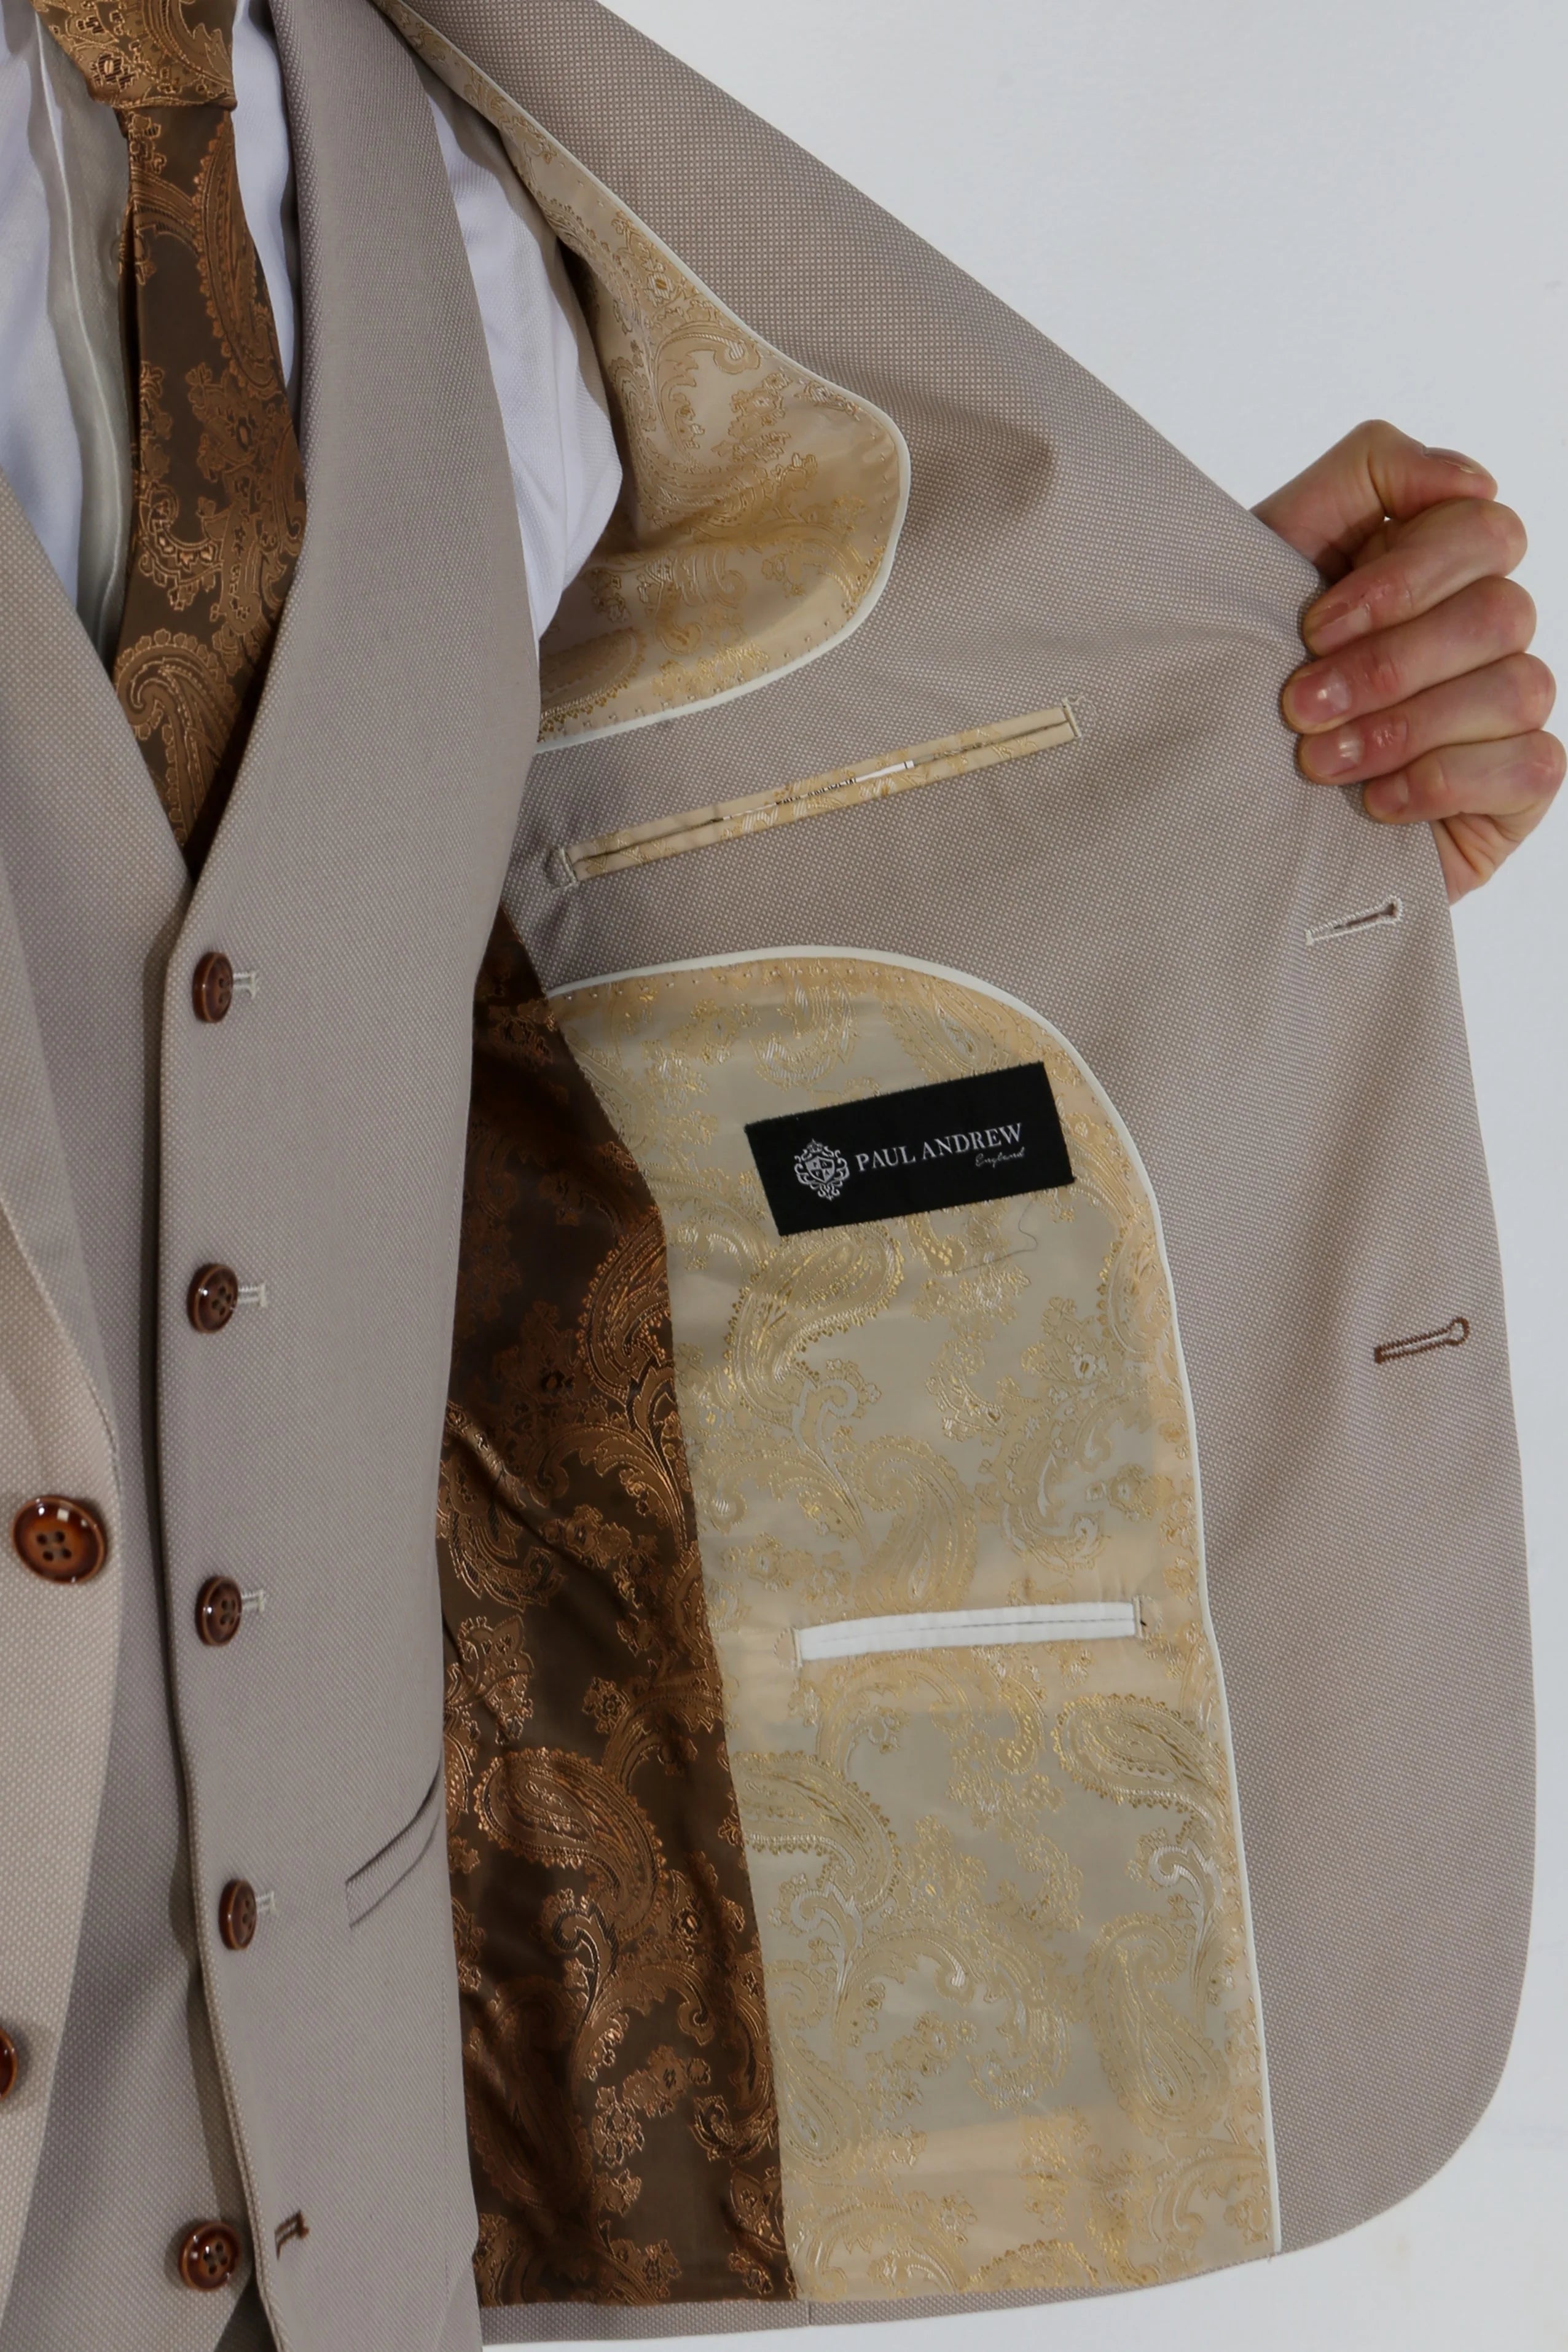 Mayfair - Men's 3 Piece Beige Birdseye Wedding Suit